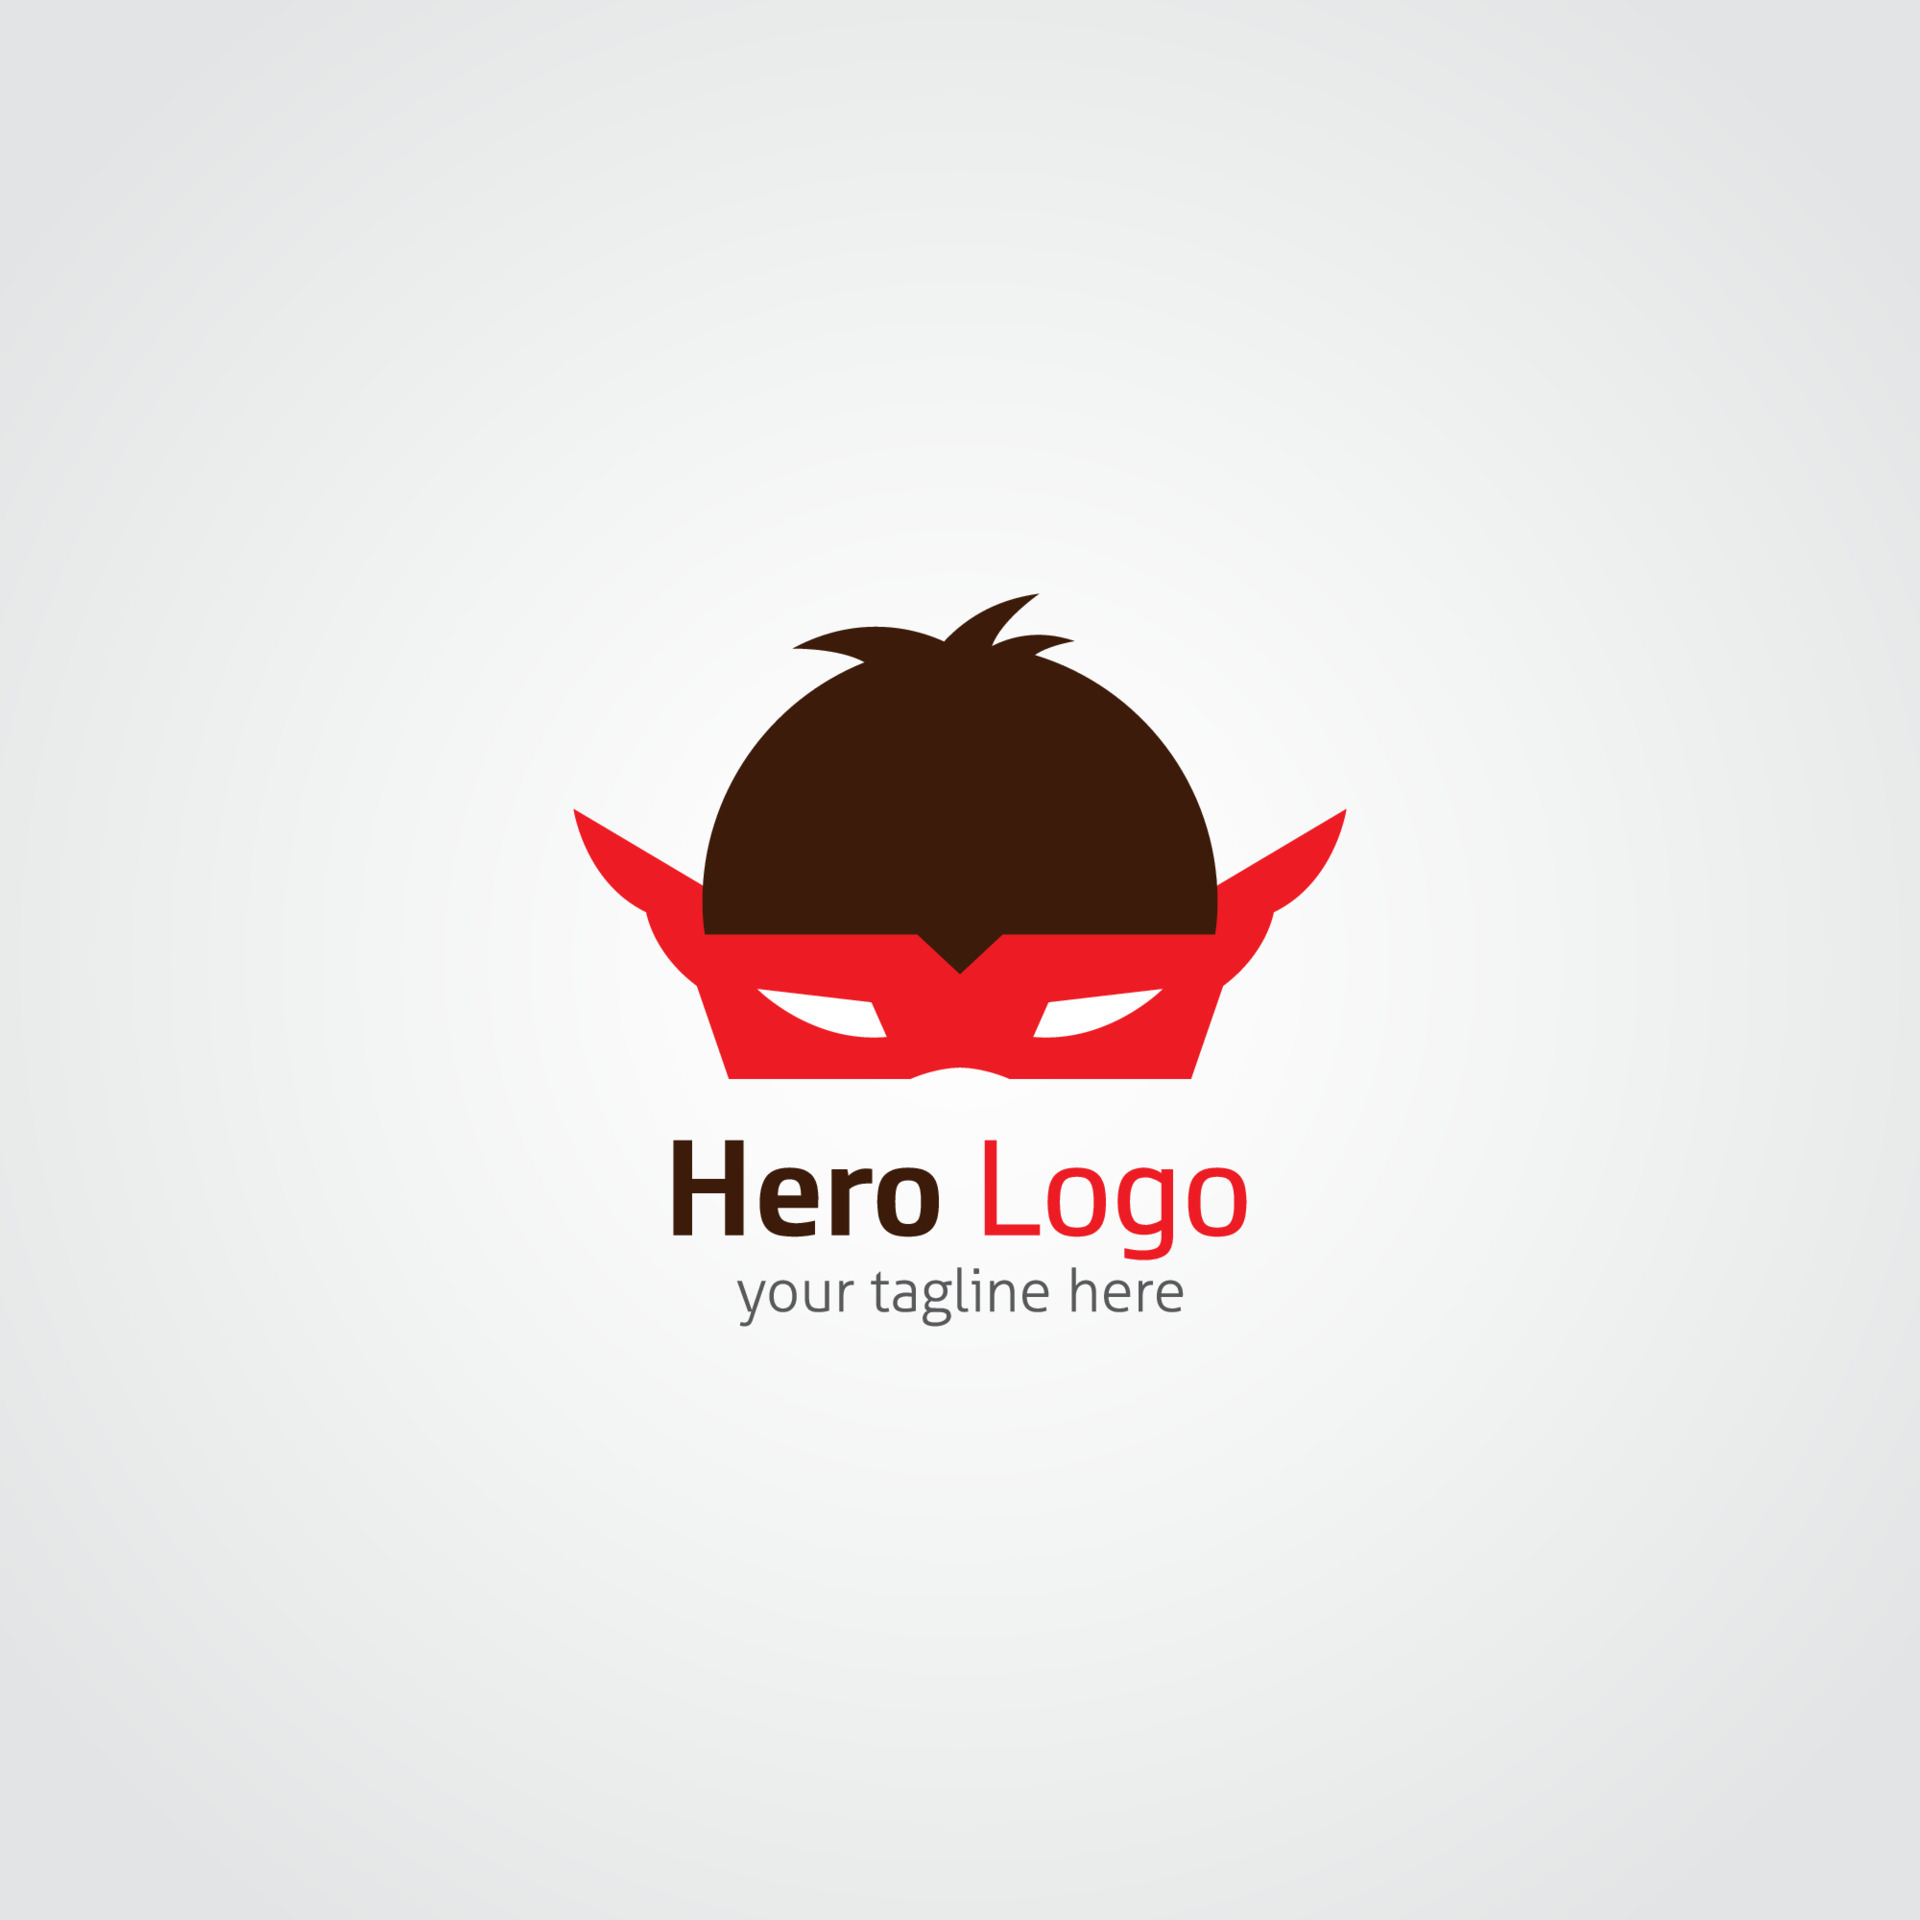 Download HERO Marketing Logo PNG and Vector (PDF, SVG, Ai, EPS) Free